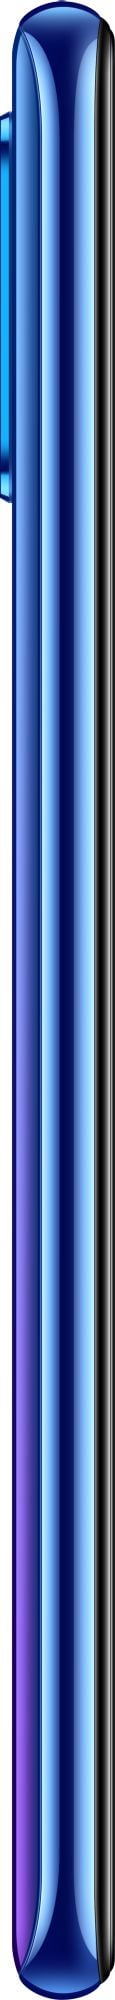 Huawei Honor 10i 128GB_hor phantom blue